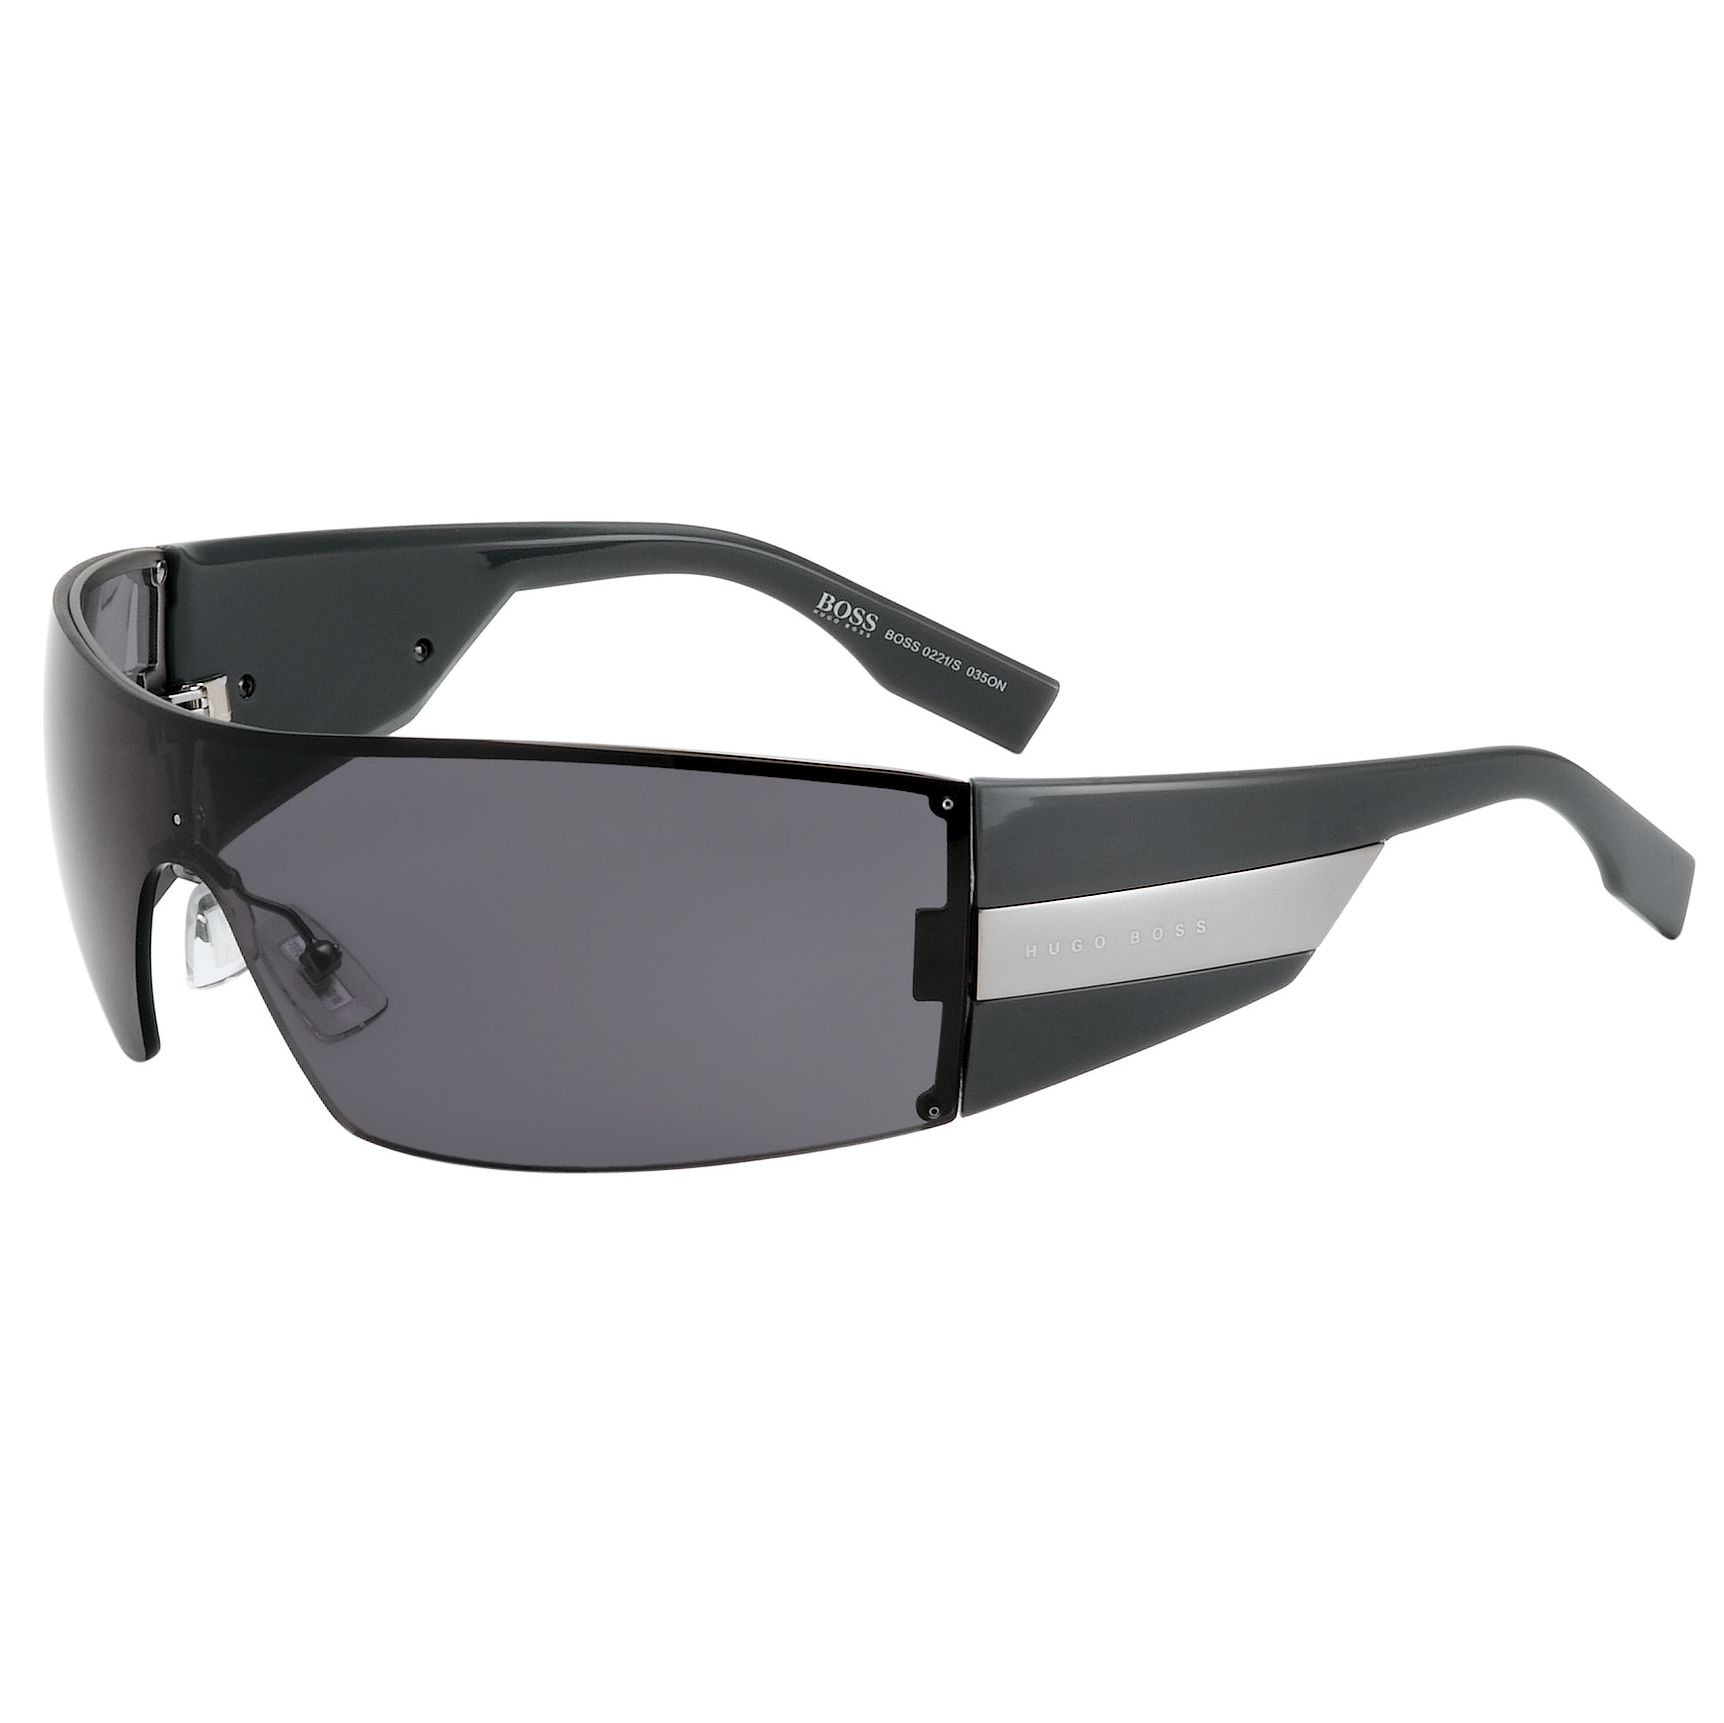 Hugo Boss Men's Sunglasses, Grey, One Size at JohnLewis